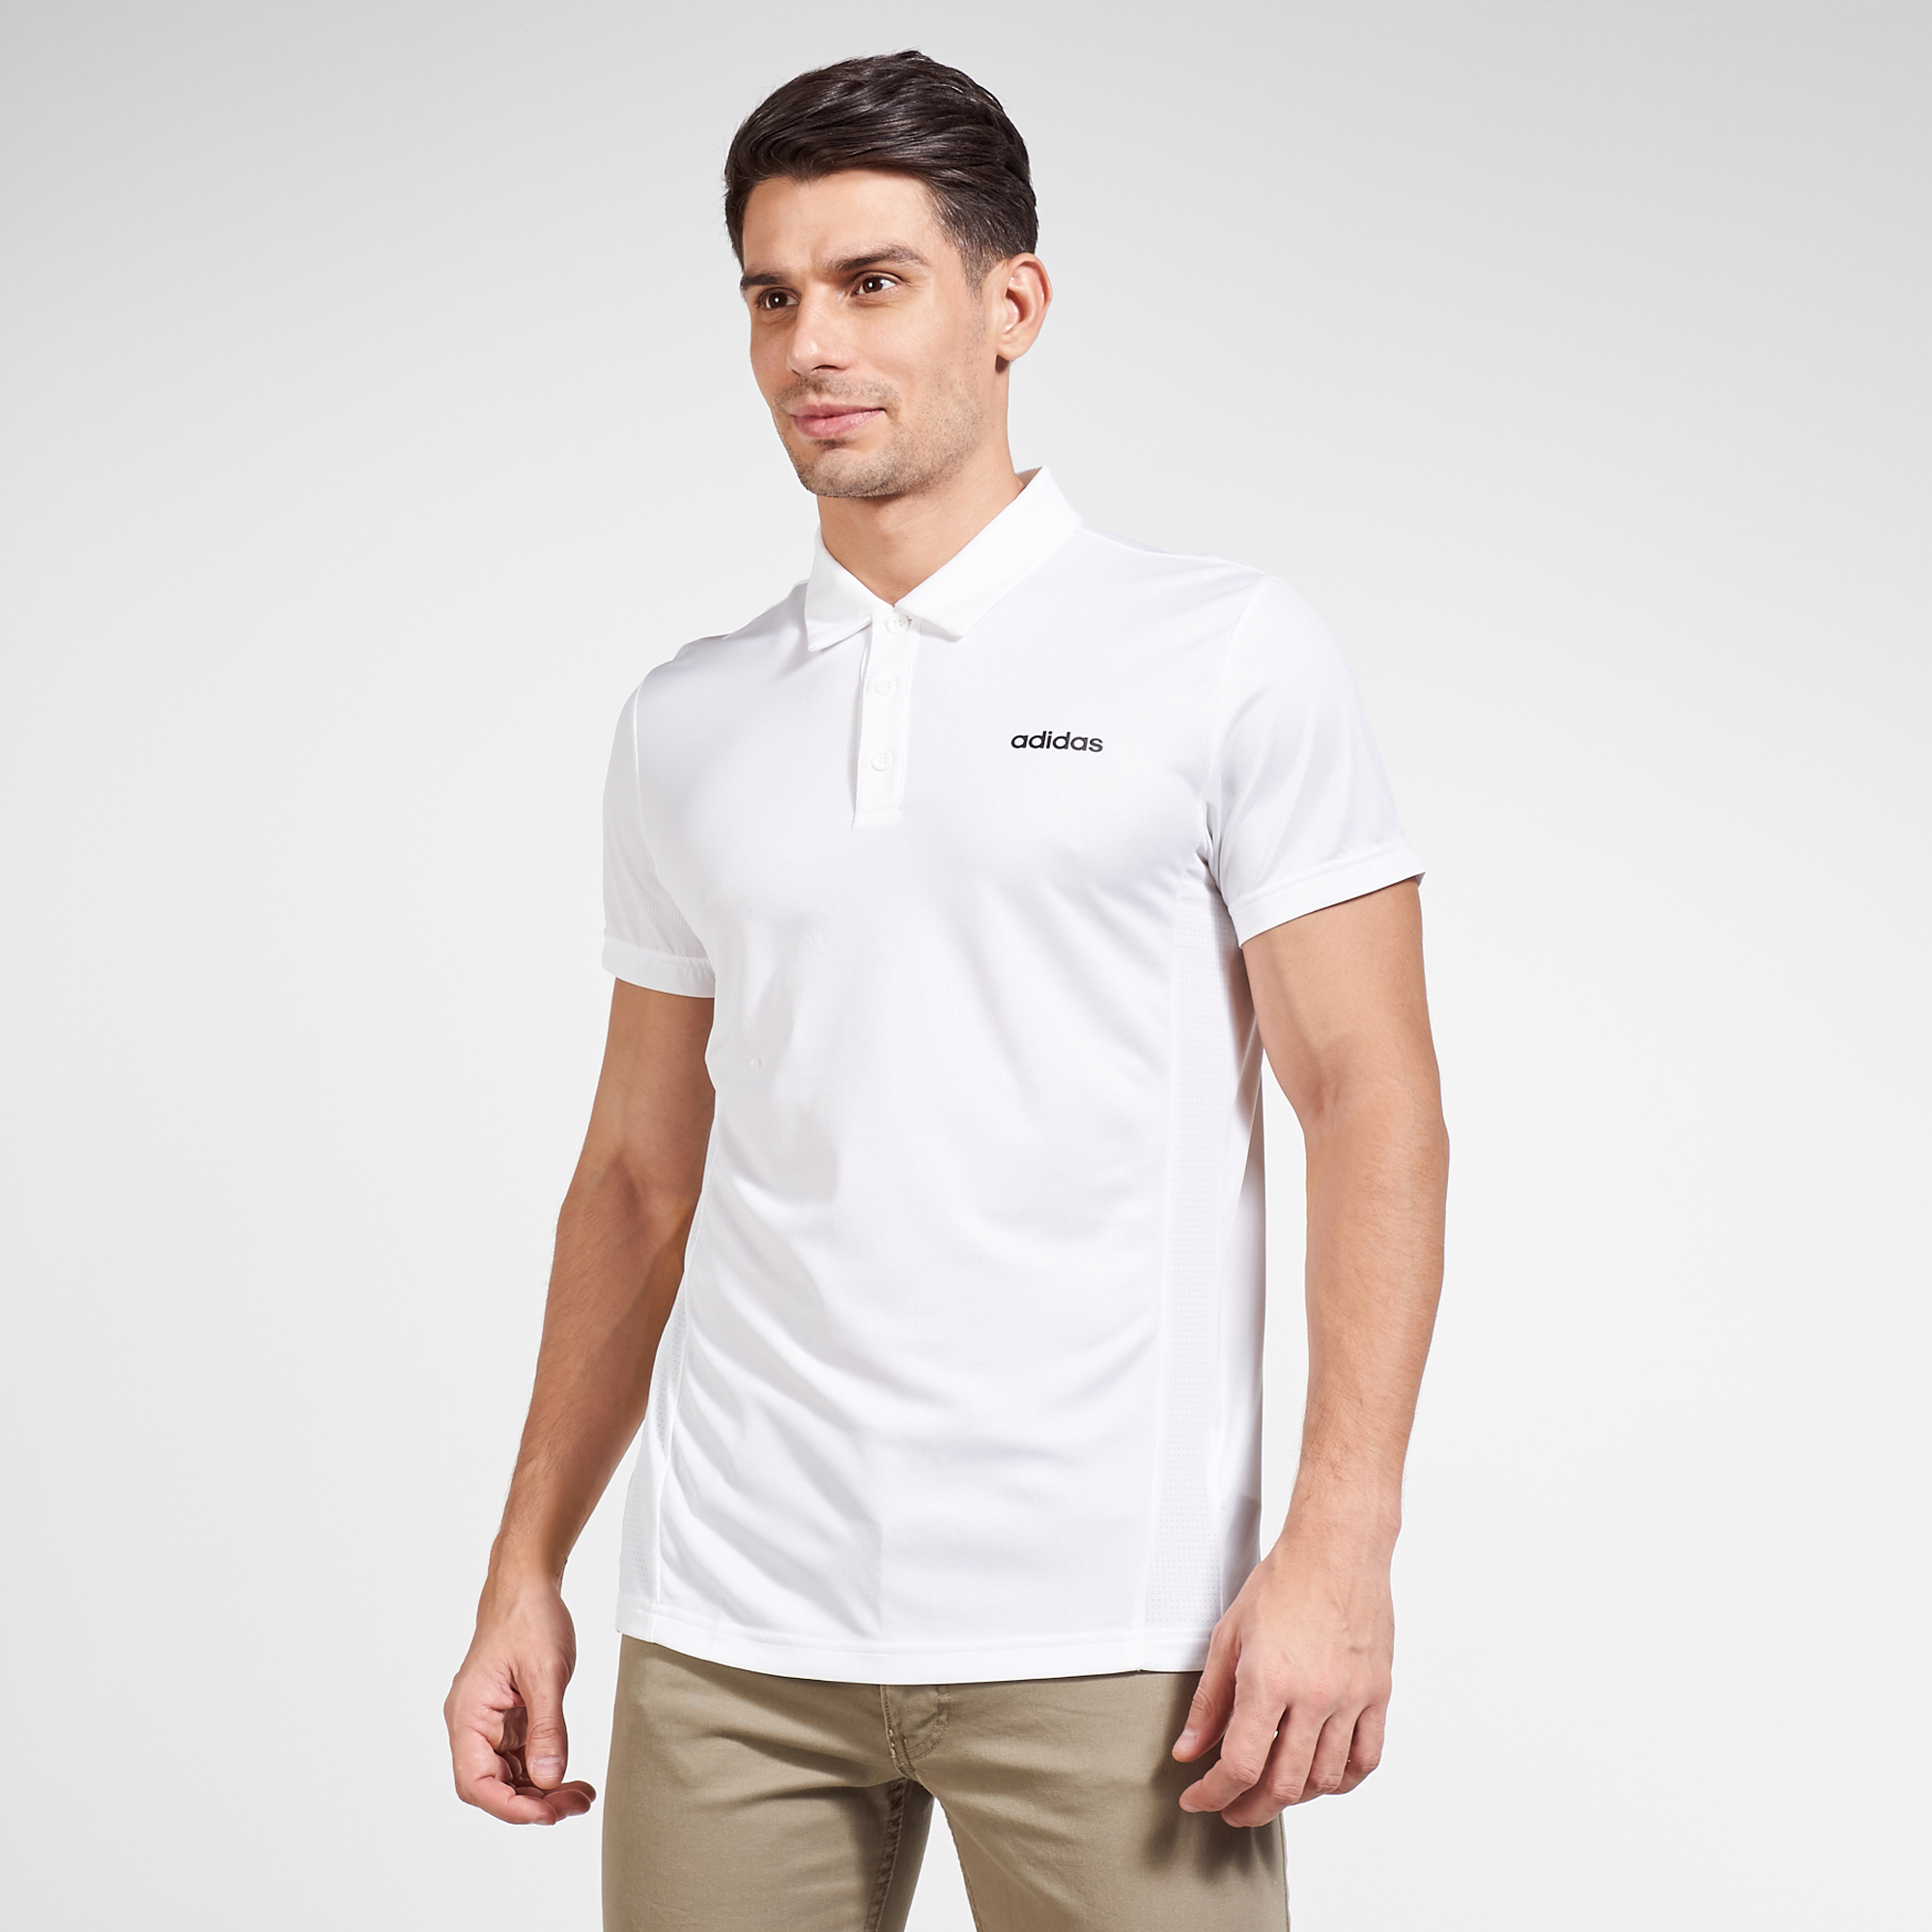 adidas Men's Designed 2 Move Polo T-Shirt | Polo Shirts | Tops ...